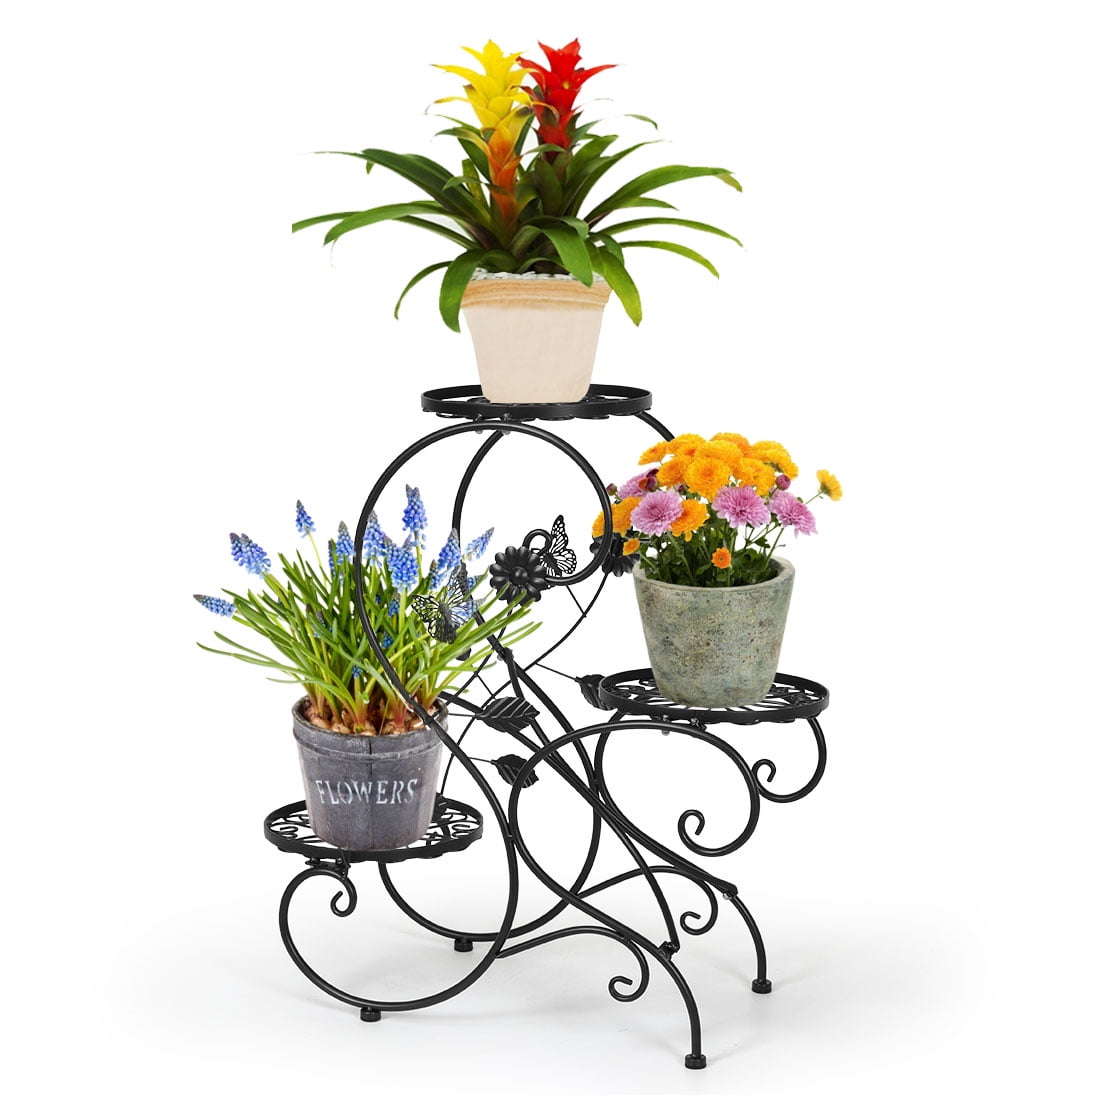 Details about   Metal Arch Plant Stand Holder 3 Pot Rack Flower Display Shelf Patio Garden Decor 